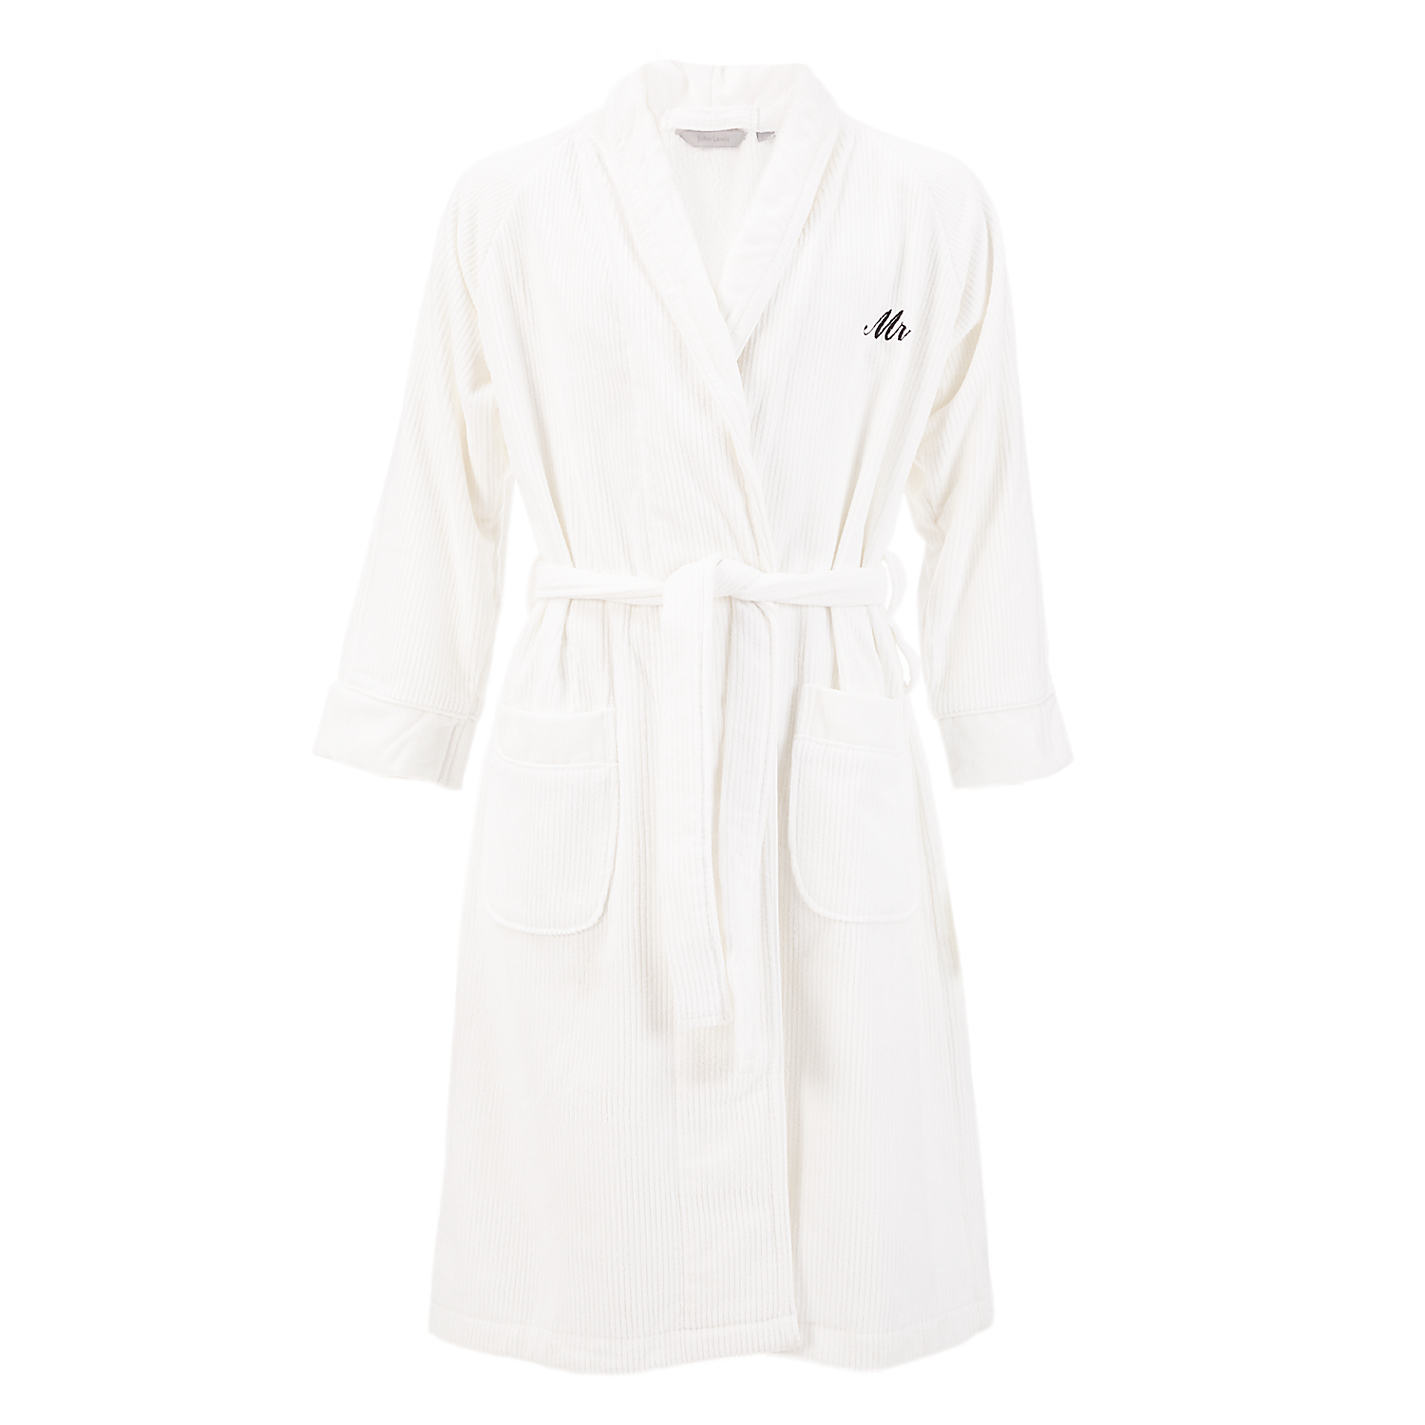 Buy John Lewis Mr Luxury Bath Robe, White | John Lewis